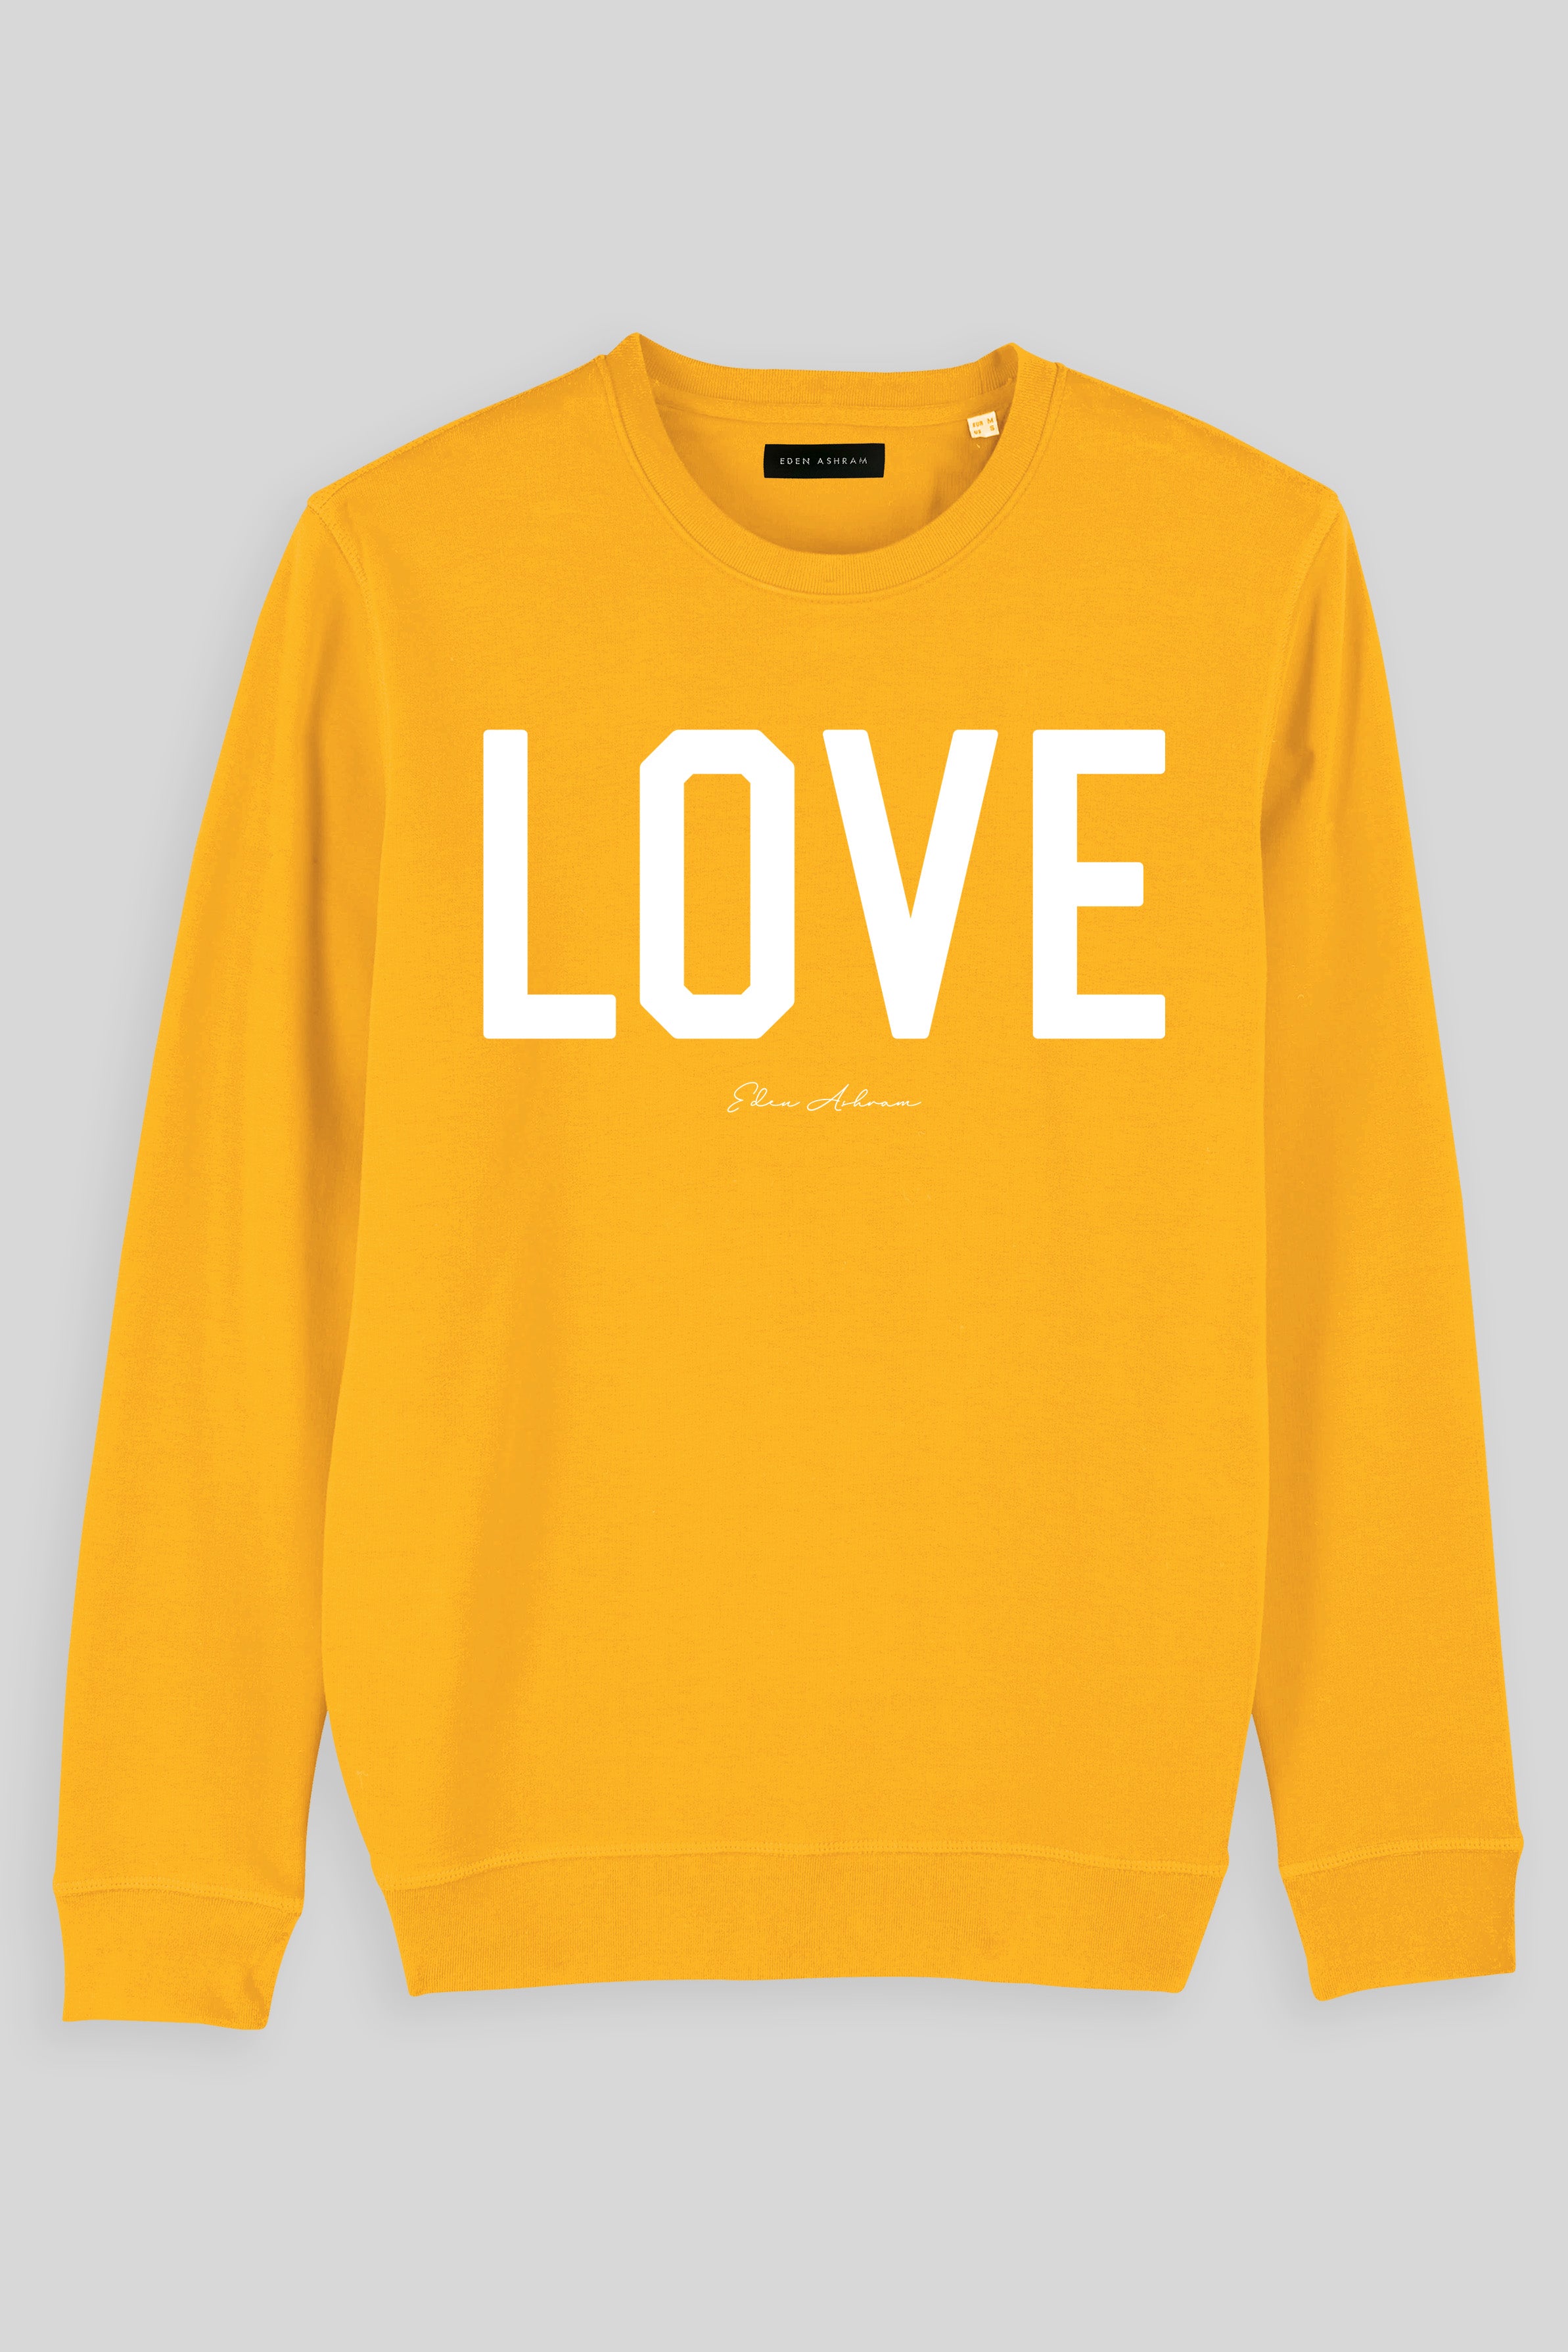 EDEN ASHRAM Love Premium Crew Neck Sweatshirt Spectra Yellow